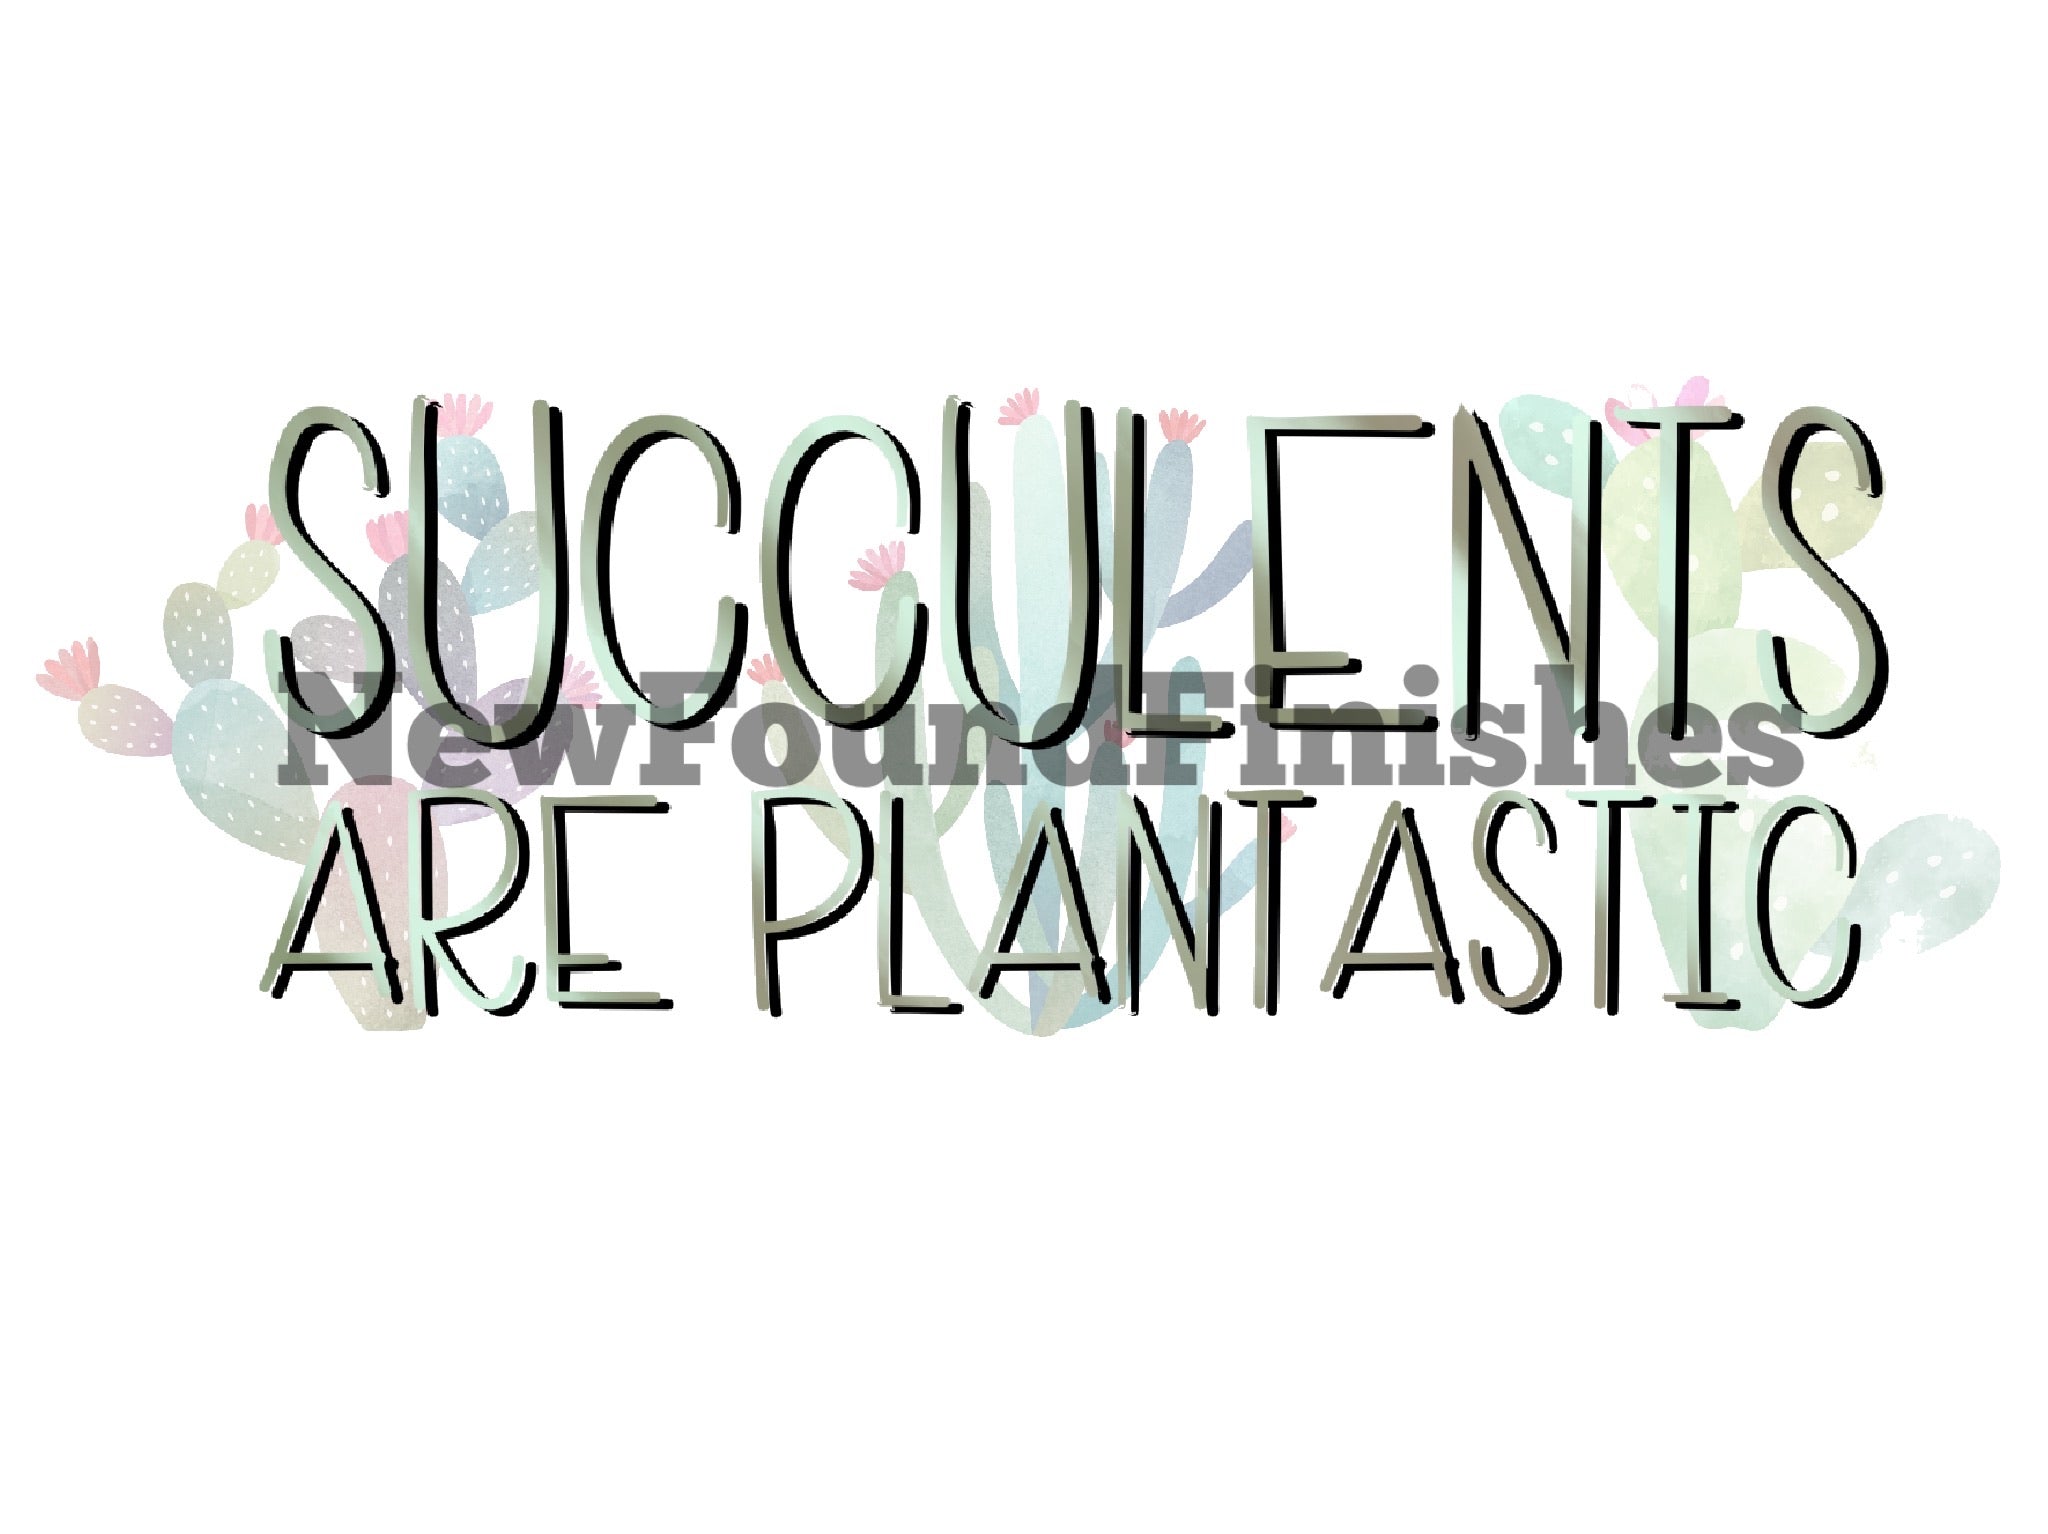 Succulents are plantastic